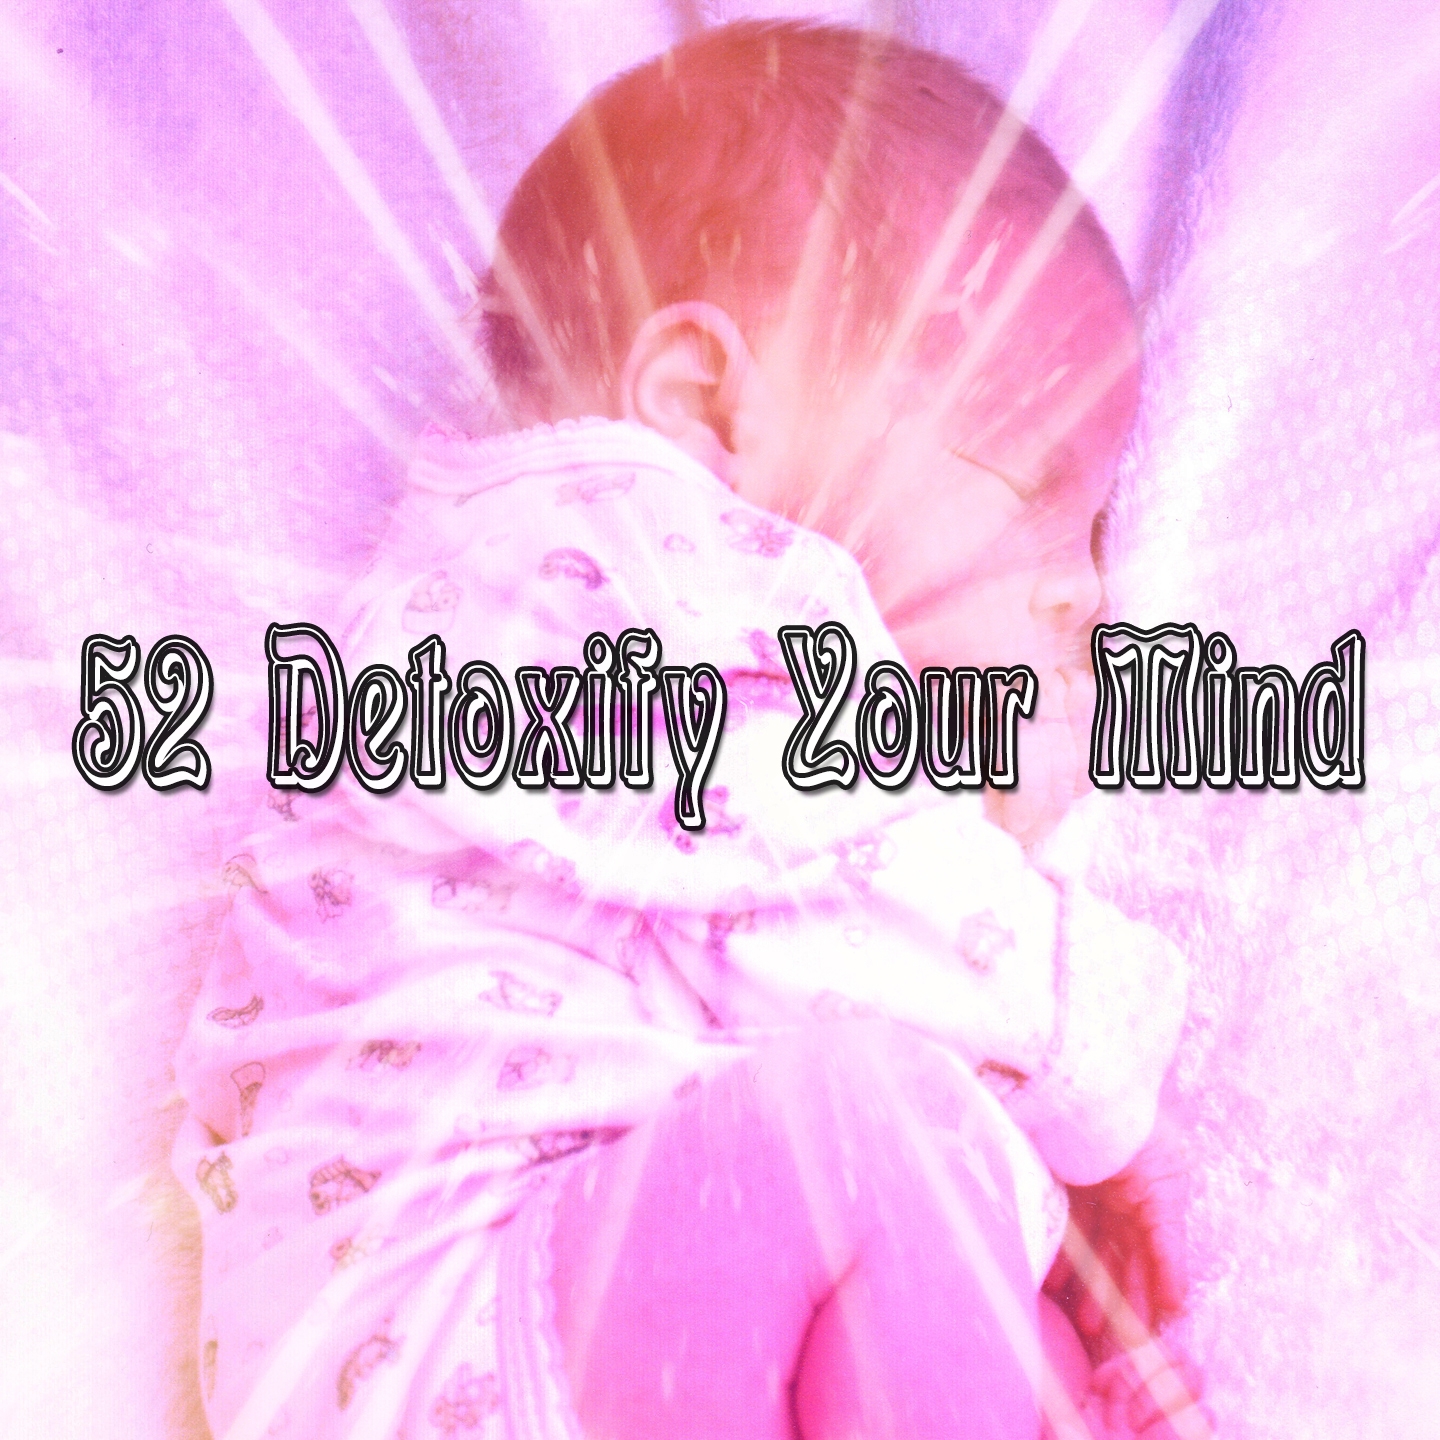 52 Detoxify Your Mind